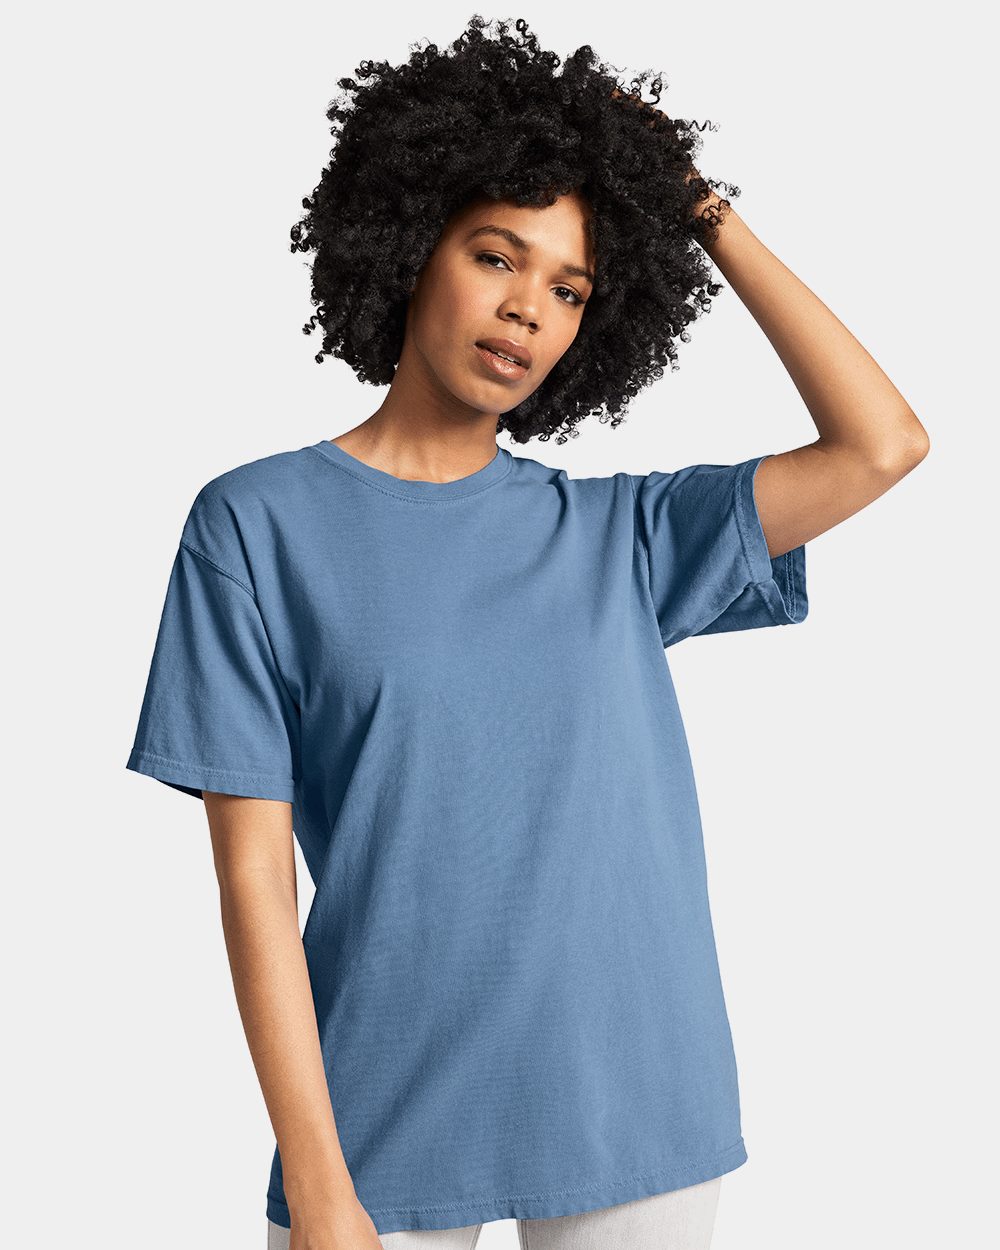 Garment-Dyed Heavyweight T-Shirt - Comfort Colors 1717